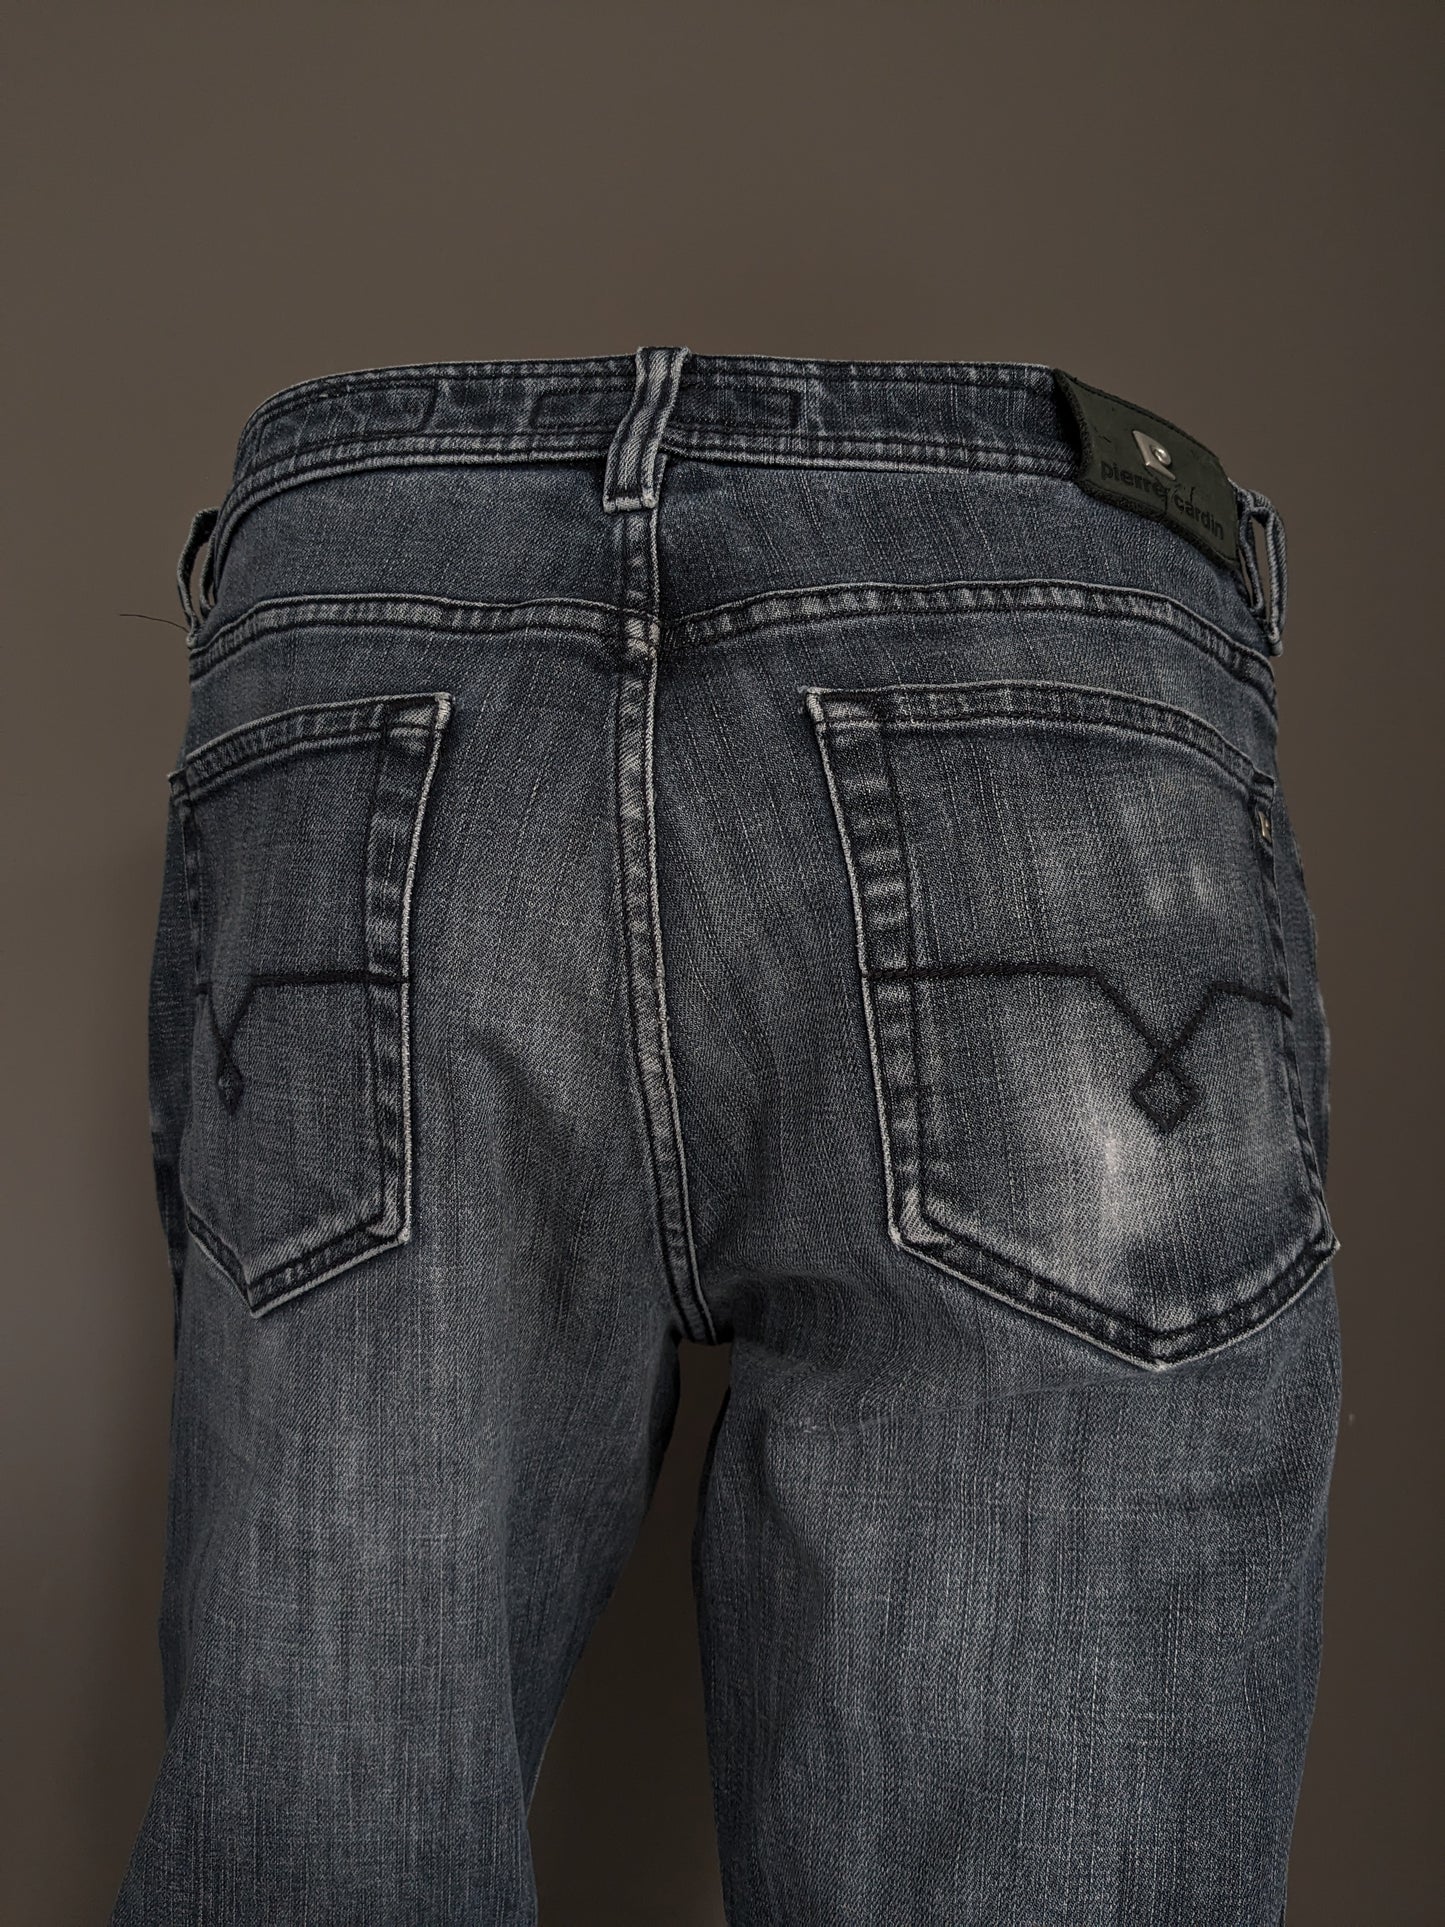 Pierre Cardin Jeans. Black gray colored. Size W33 - L30. Type mod Deauville.